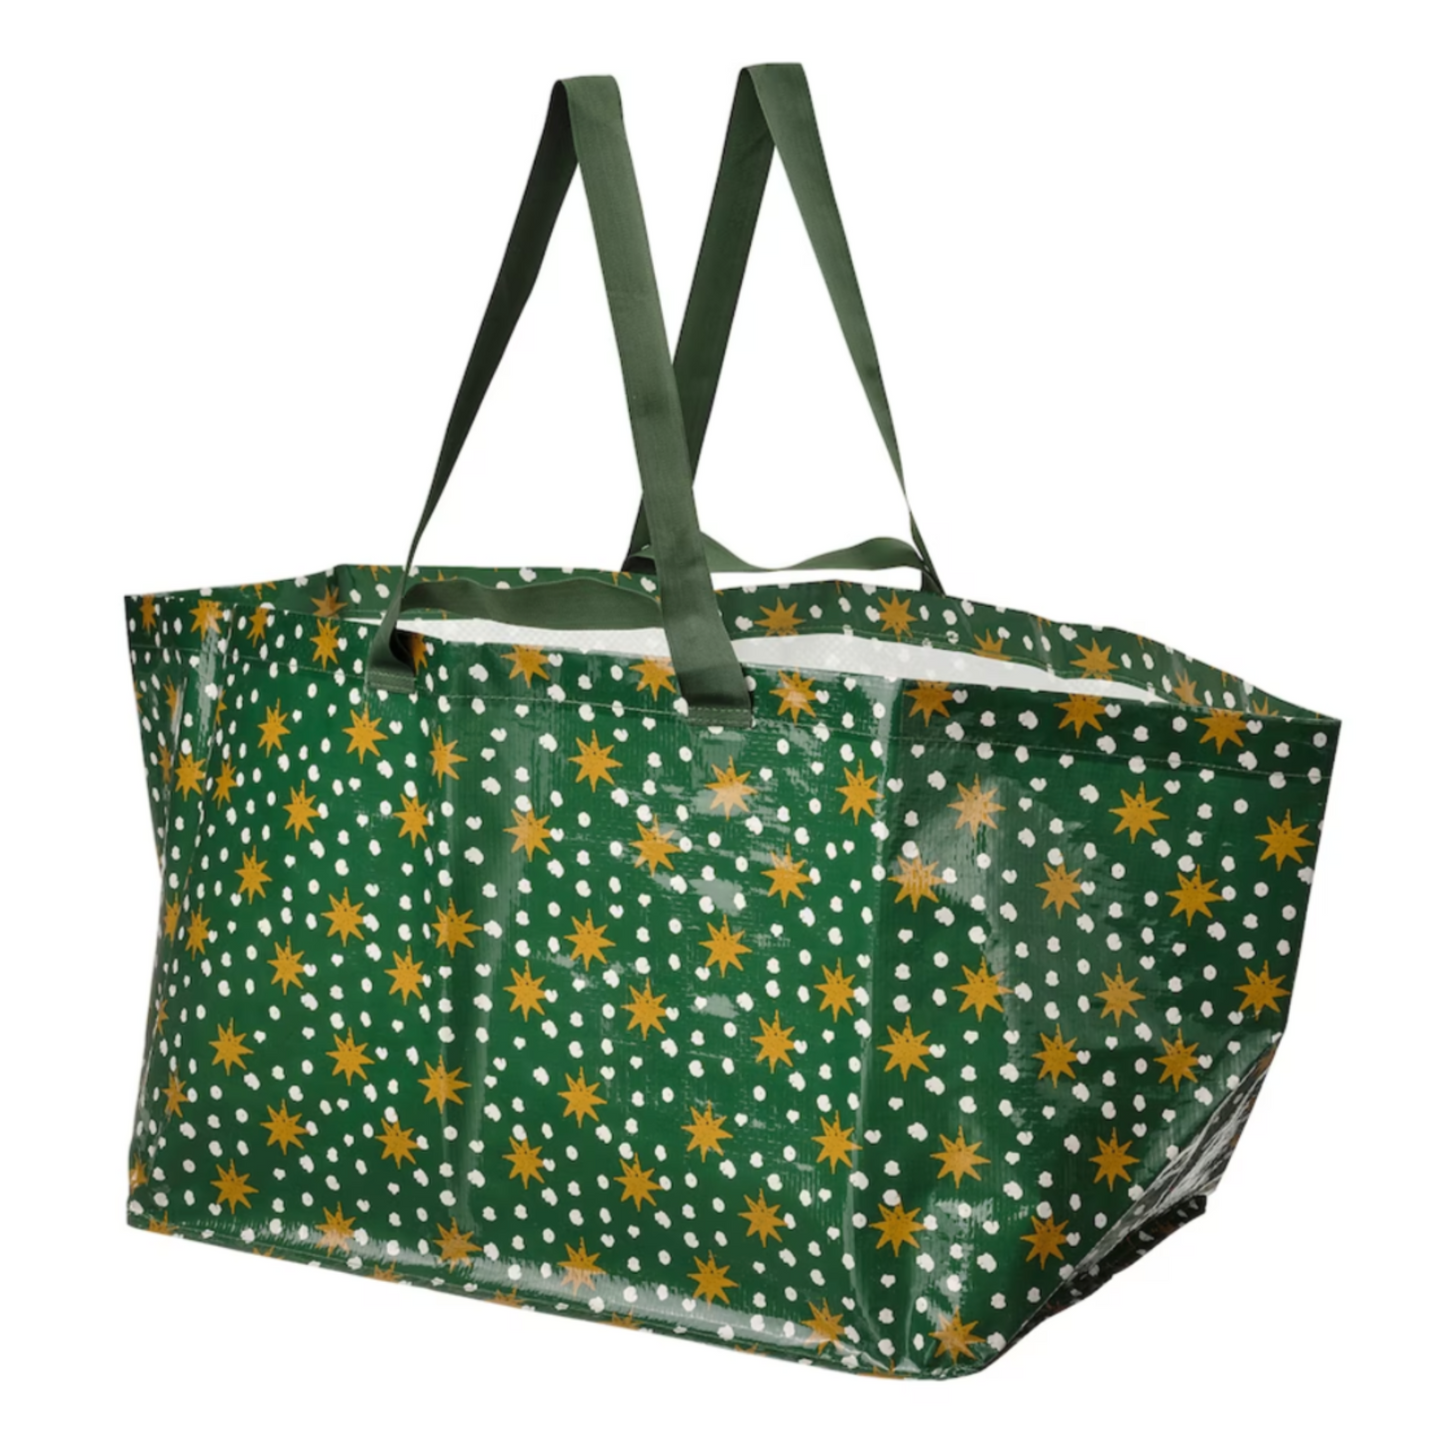 Ikea Vinterfint Carry Bag 71l, Stars (8819579093279)